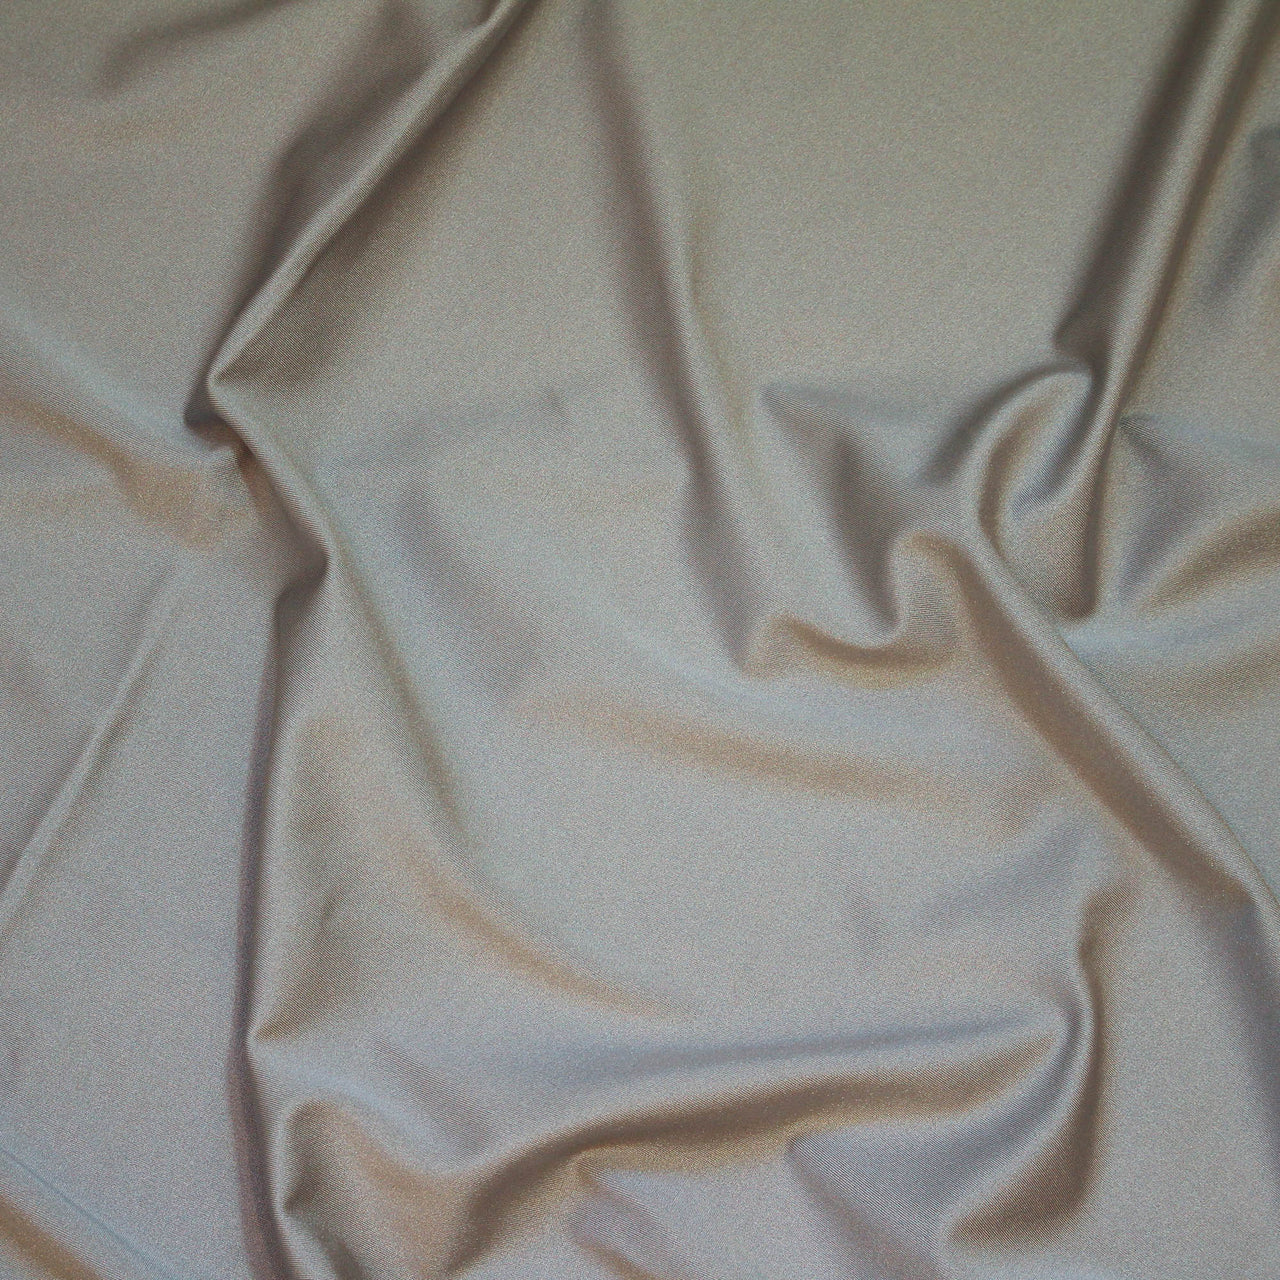 Silver - Nylon Spandex Fabric - 4 Way All Way Stretch Superior Quality - Leotards, Dancewear